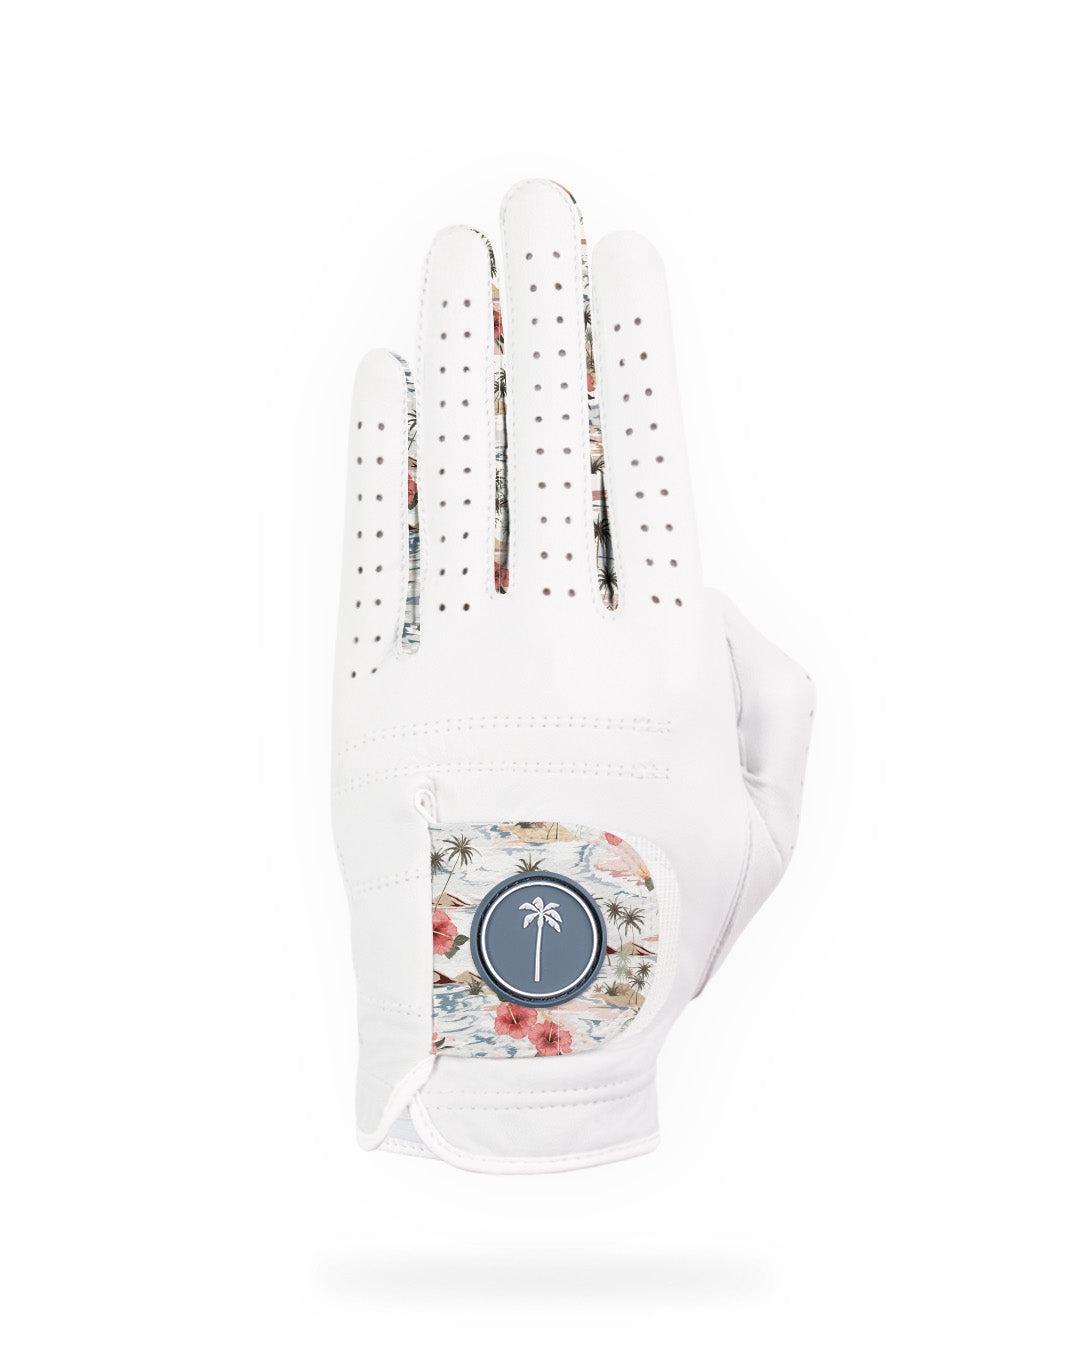 Women's Tropics Glove - Palm Golf Co.